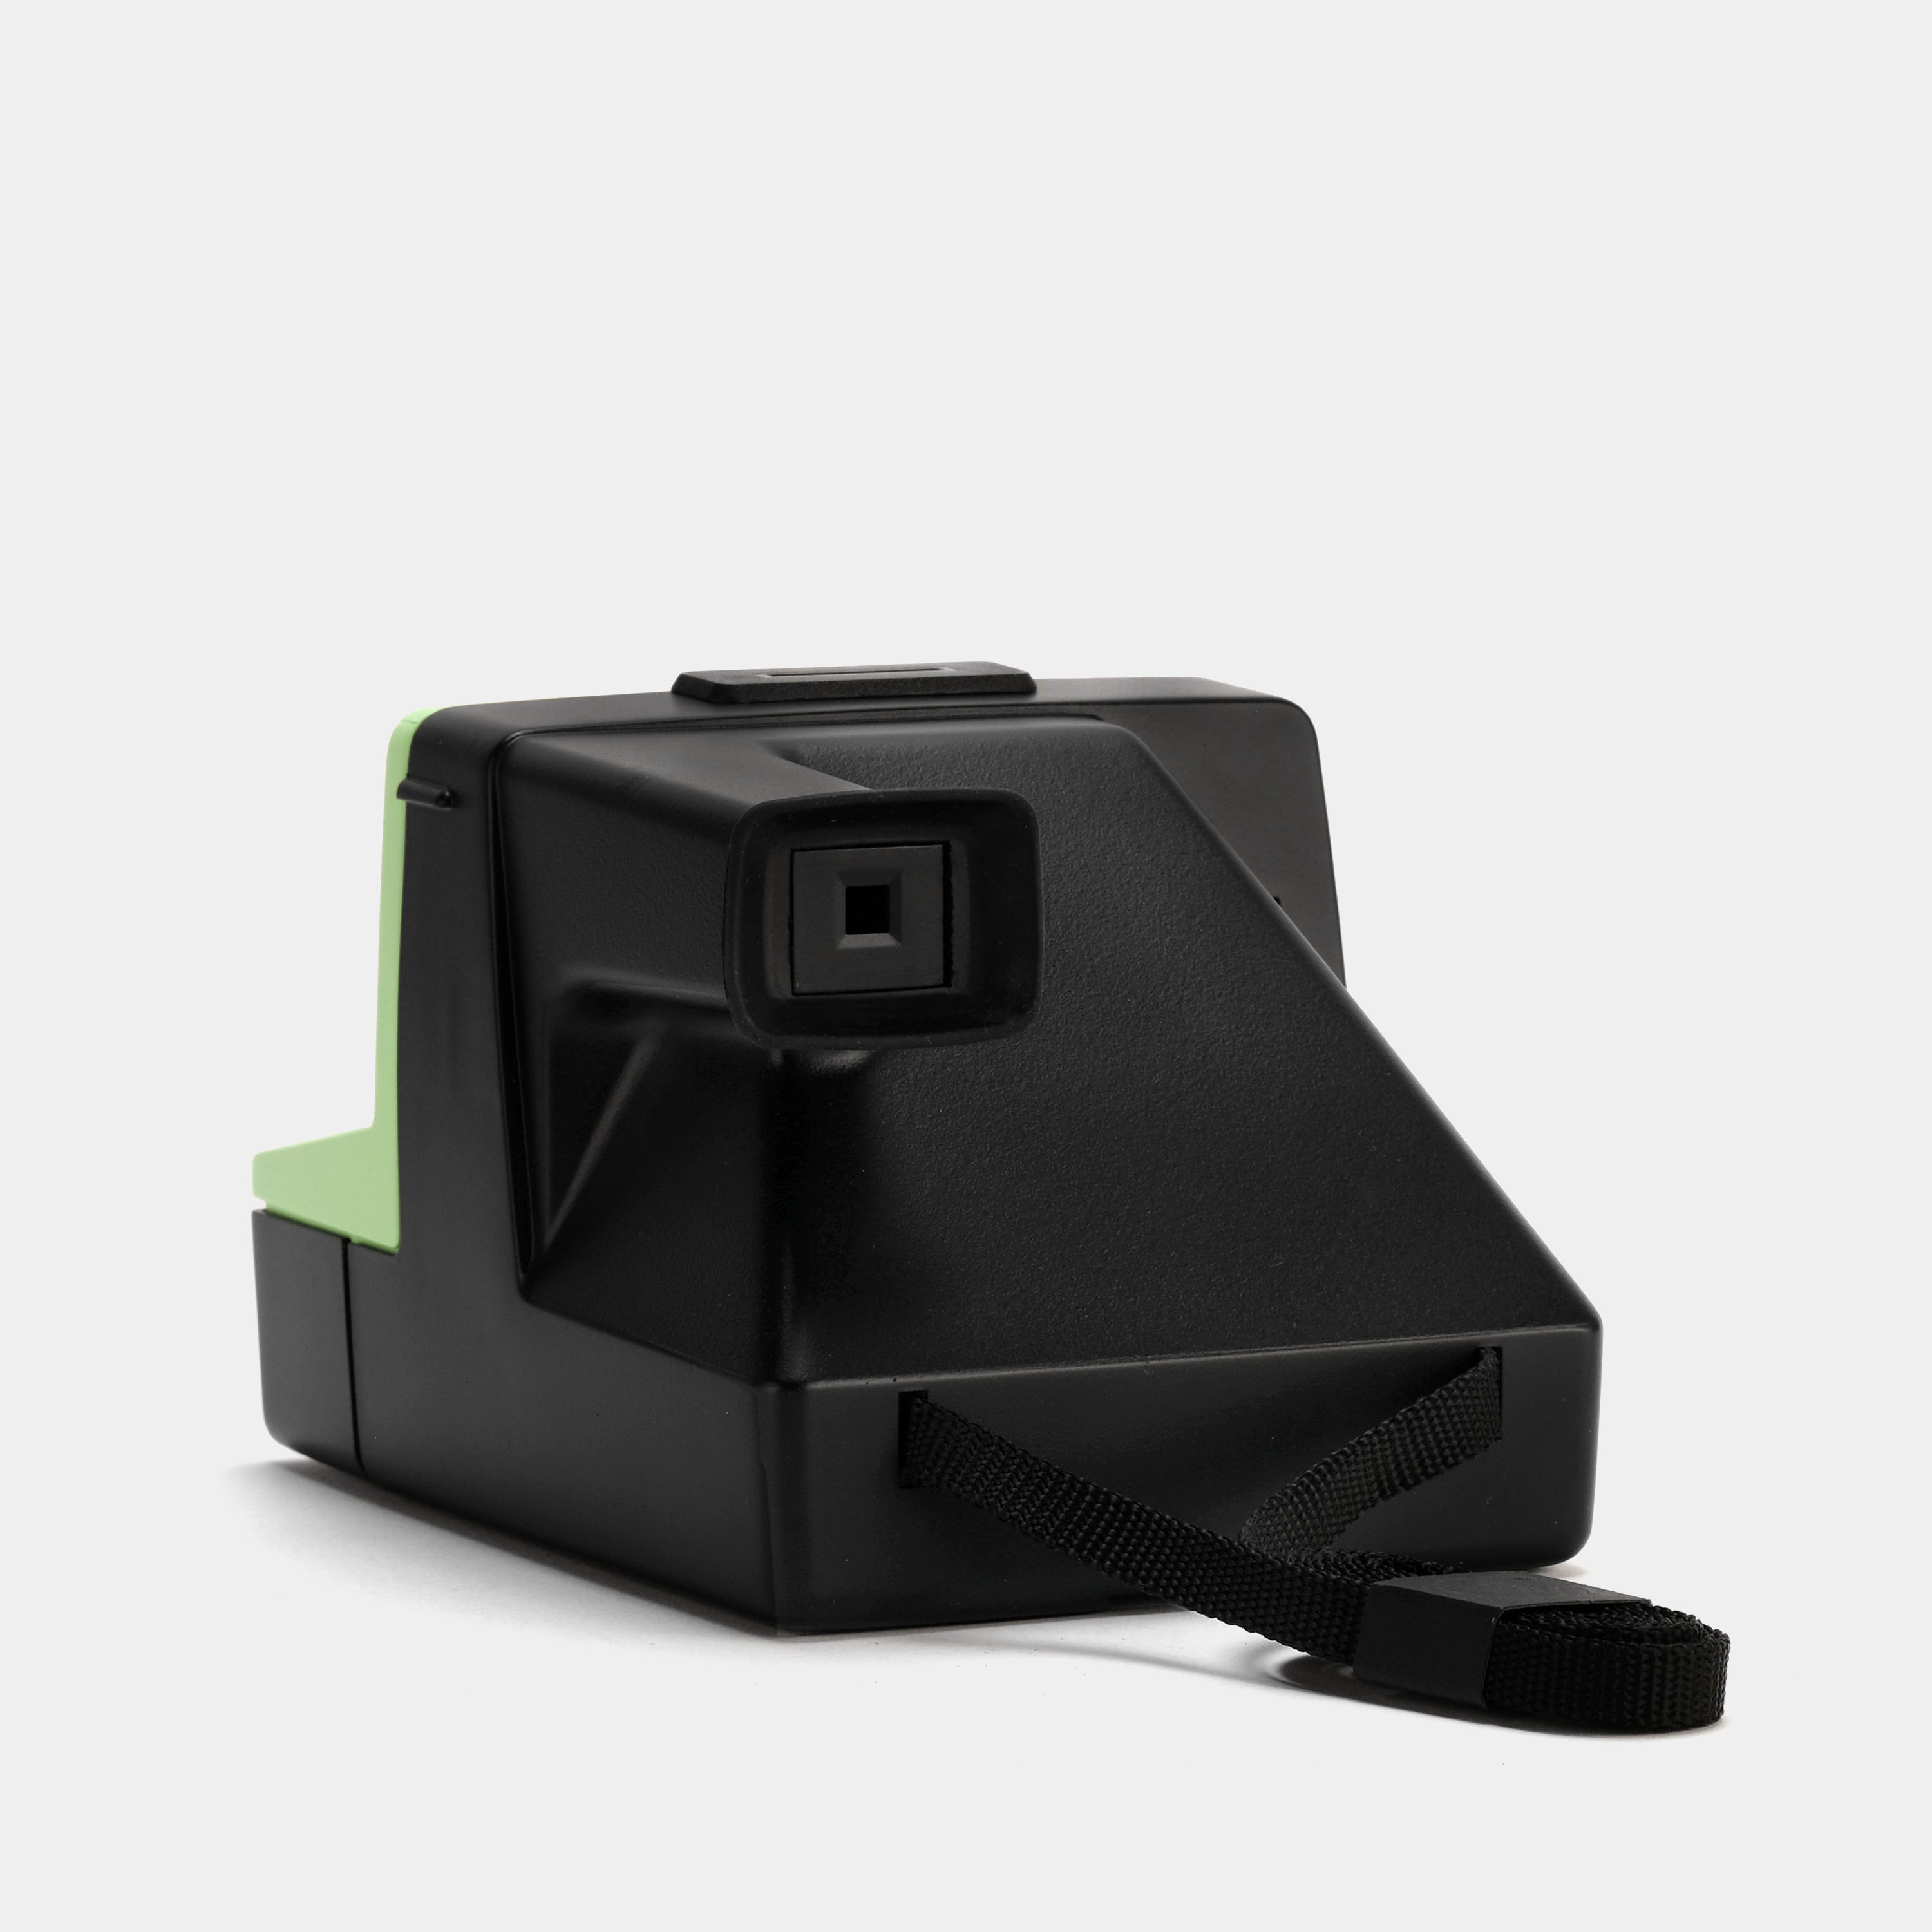 Polaroid SX-70 Green Instant Film Camera